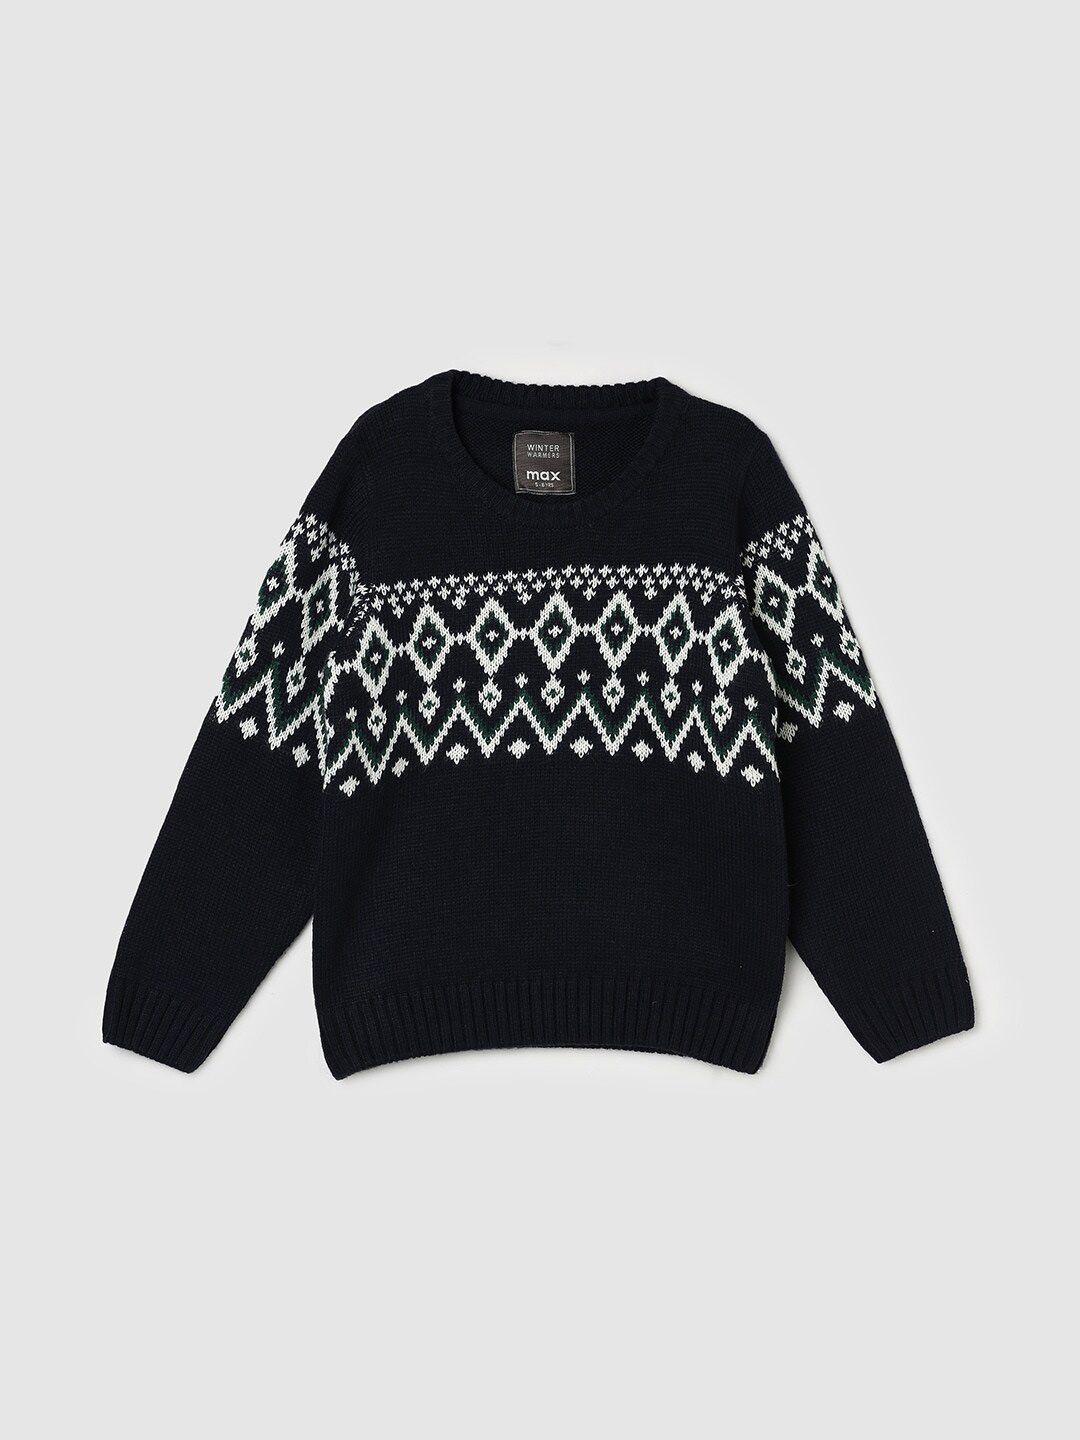 max boys geometric printed pullover sweater